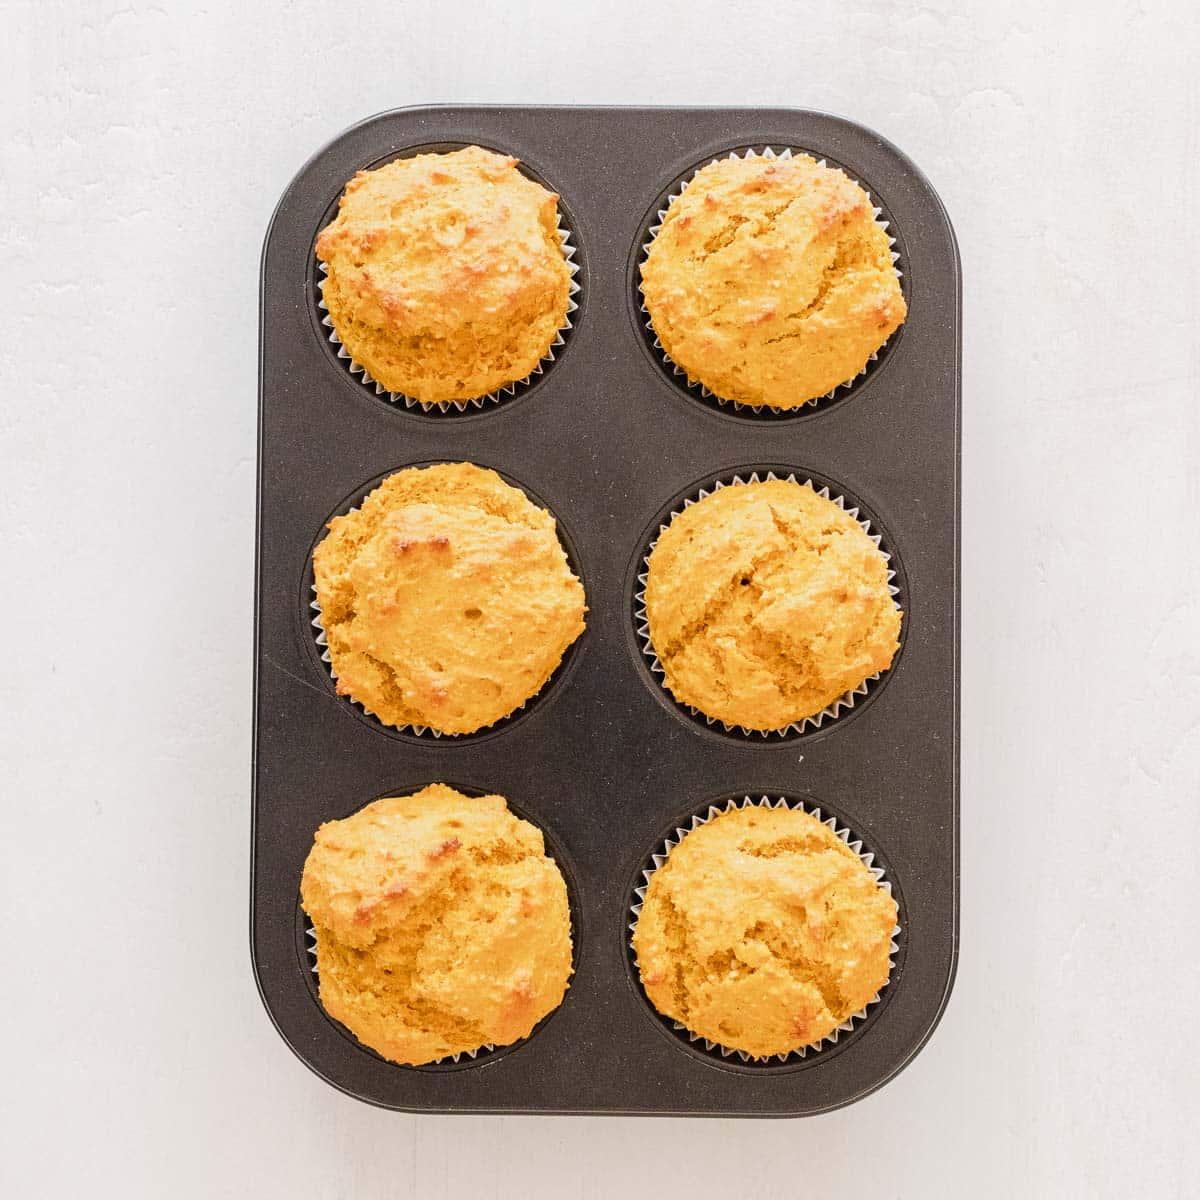 muffins in a muffin pan